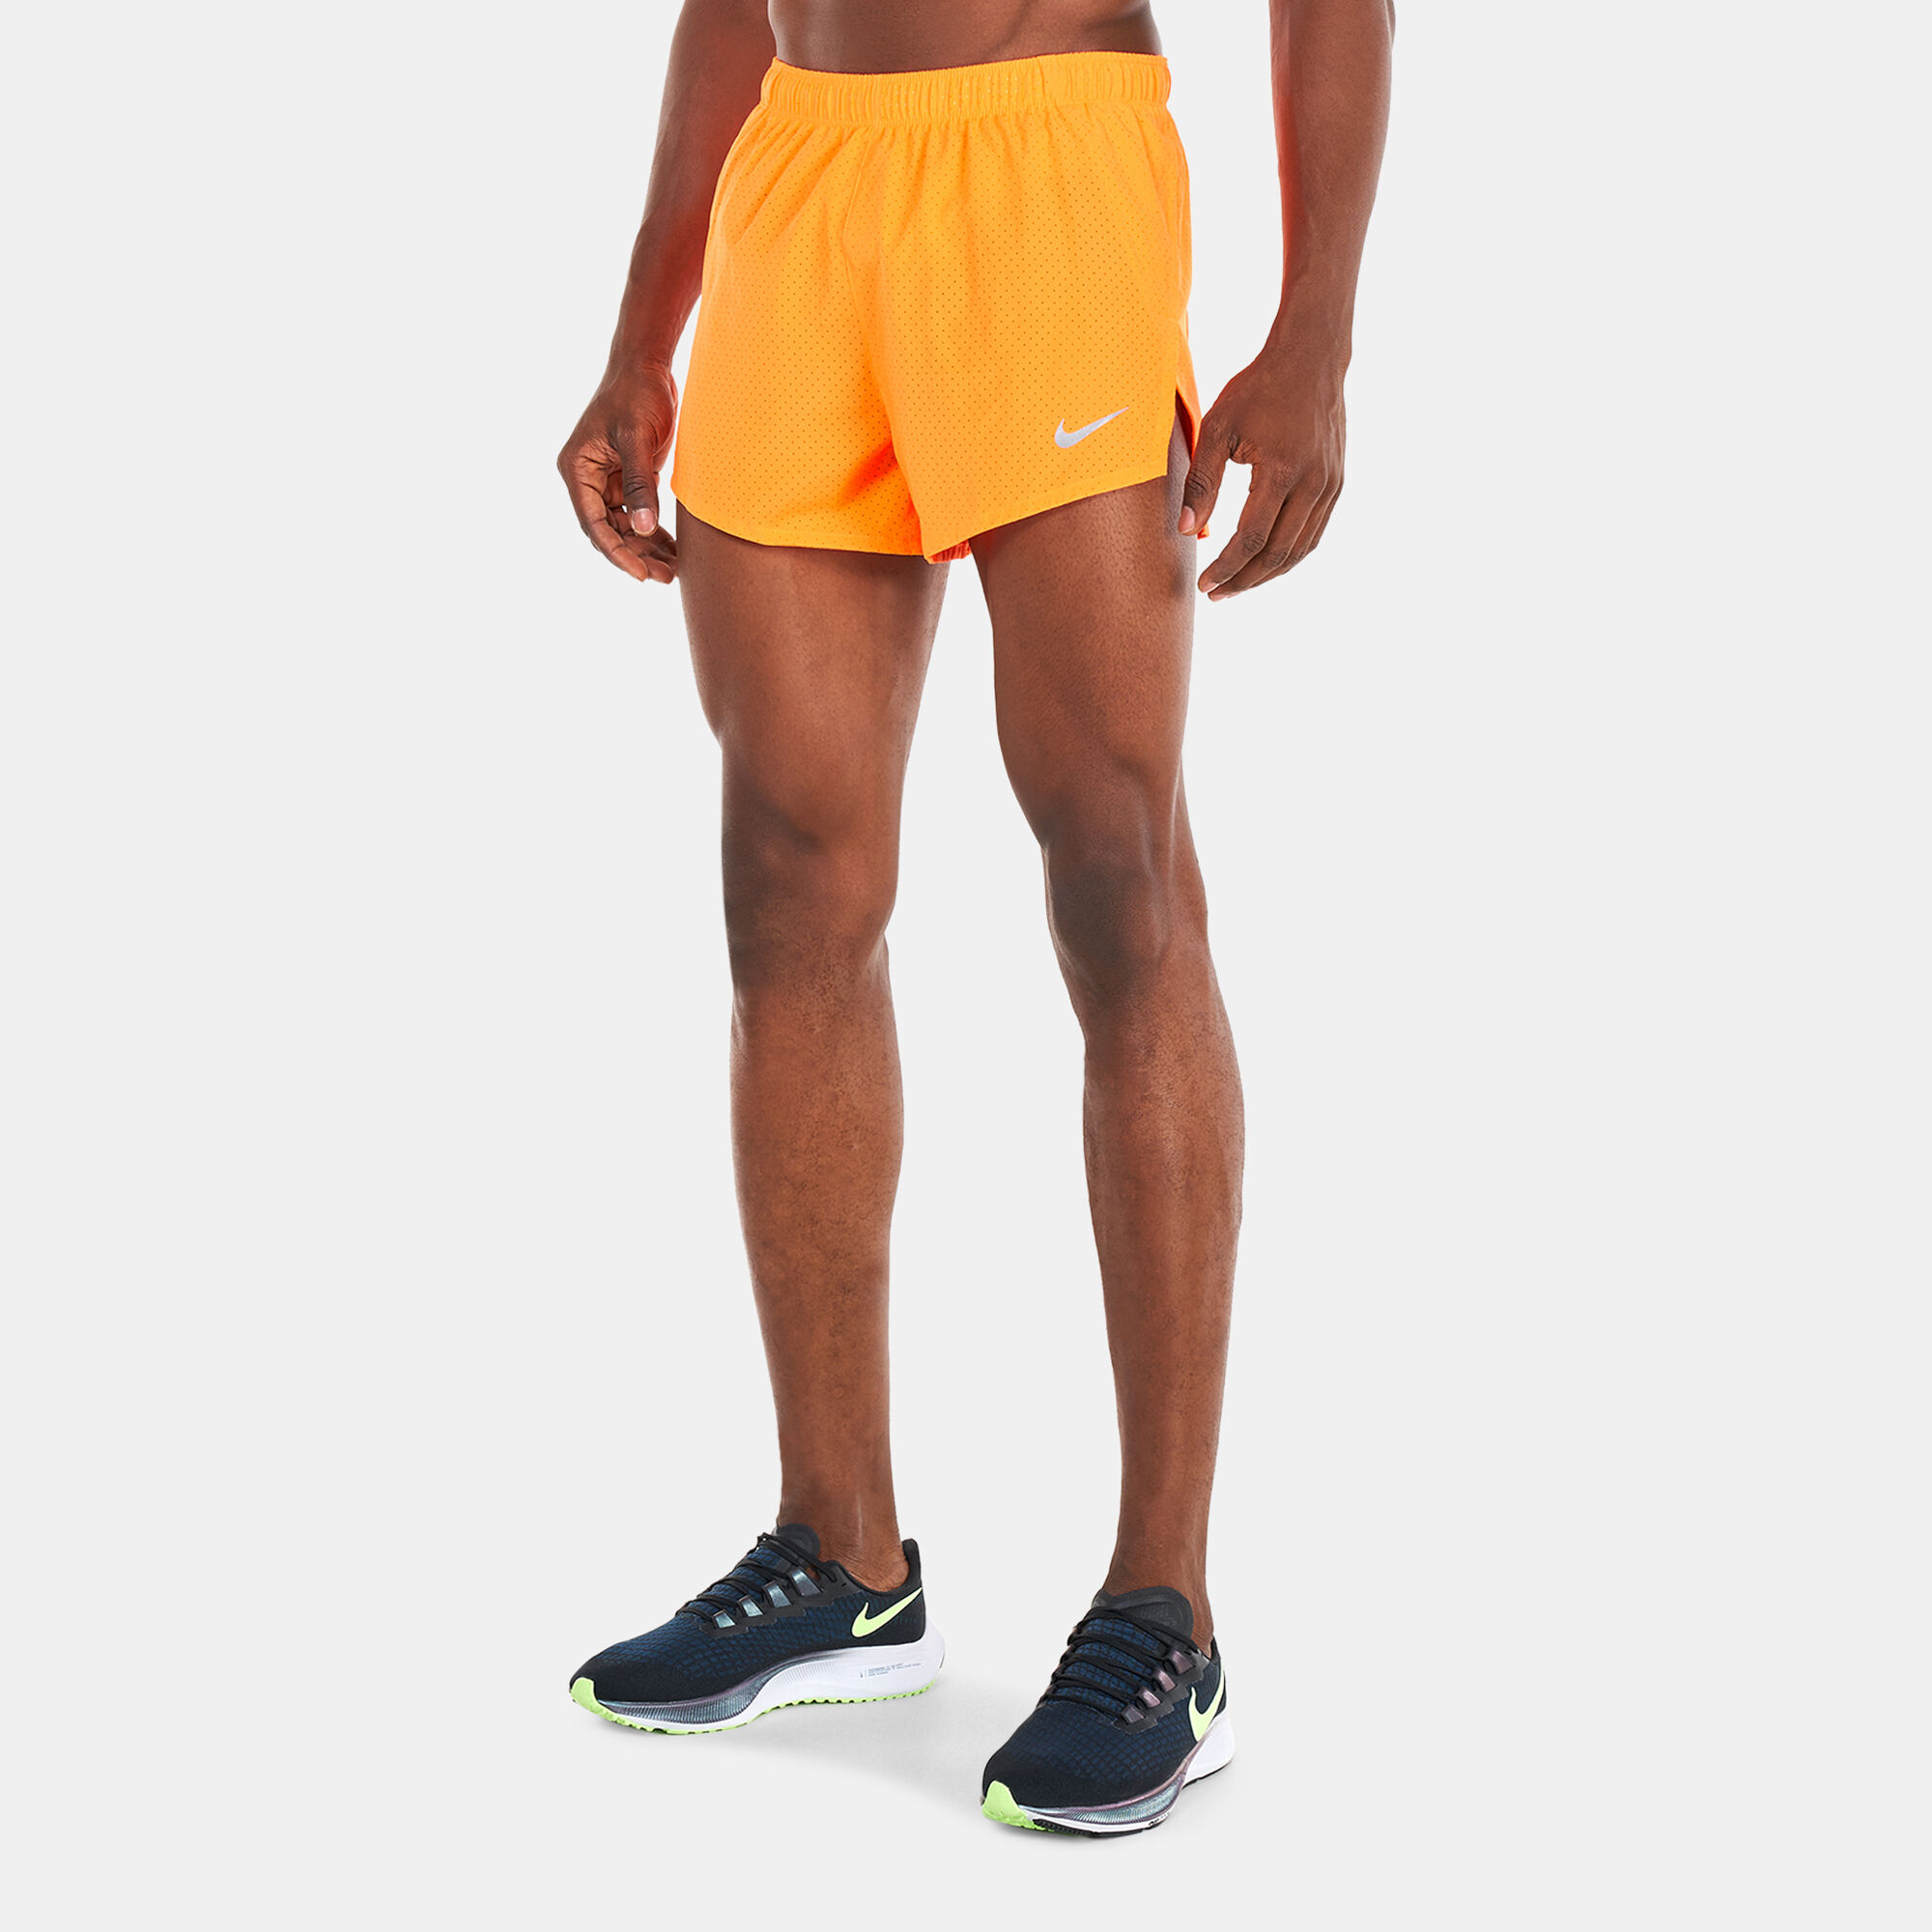 Nike Mens Fast 2 Inch Running Shorts